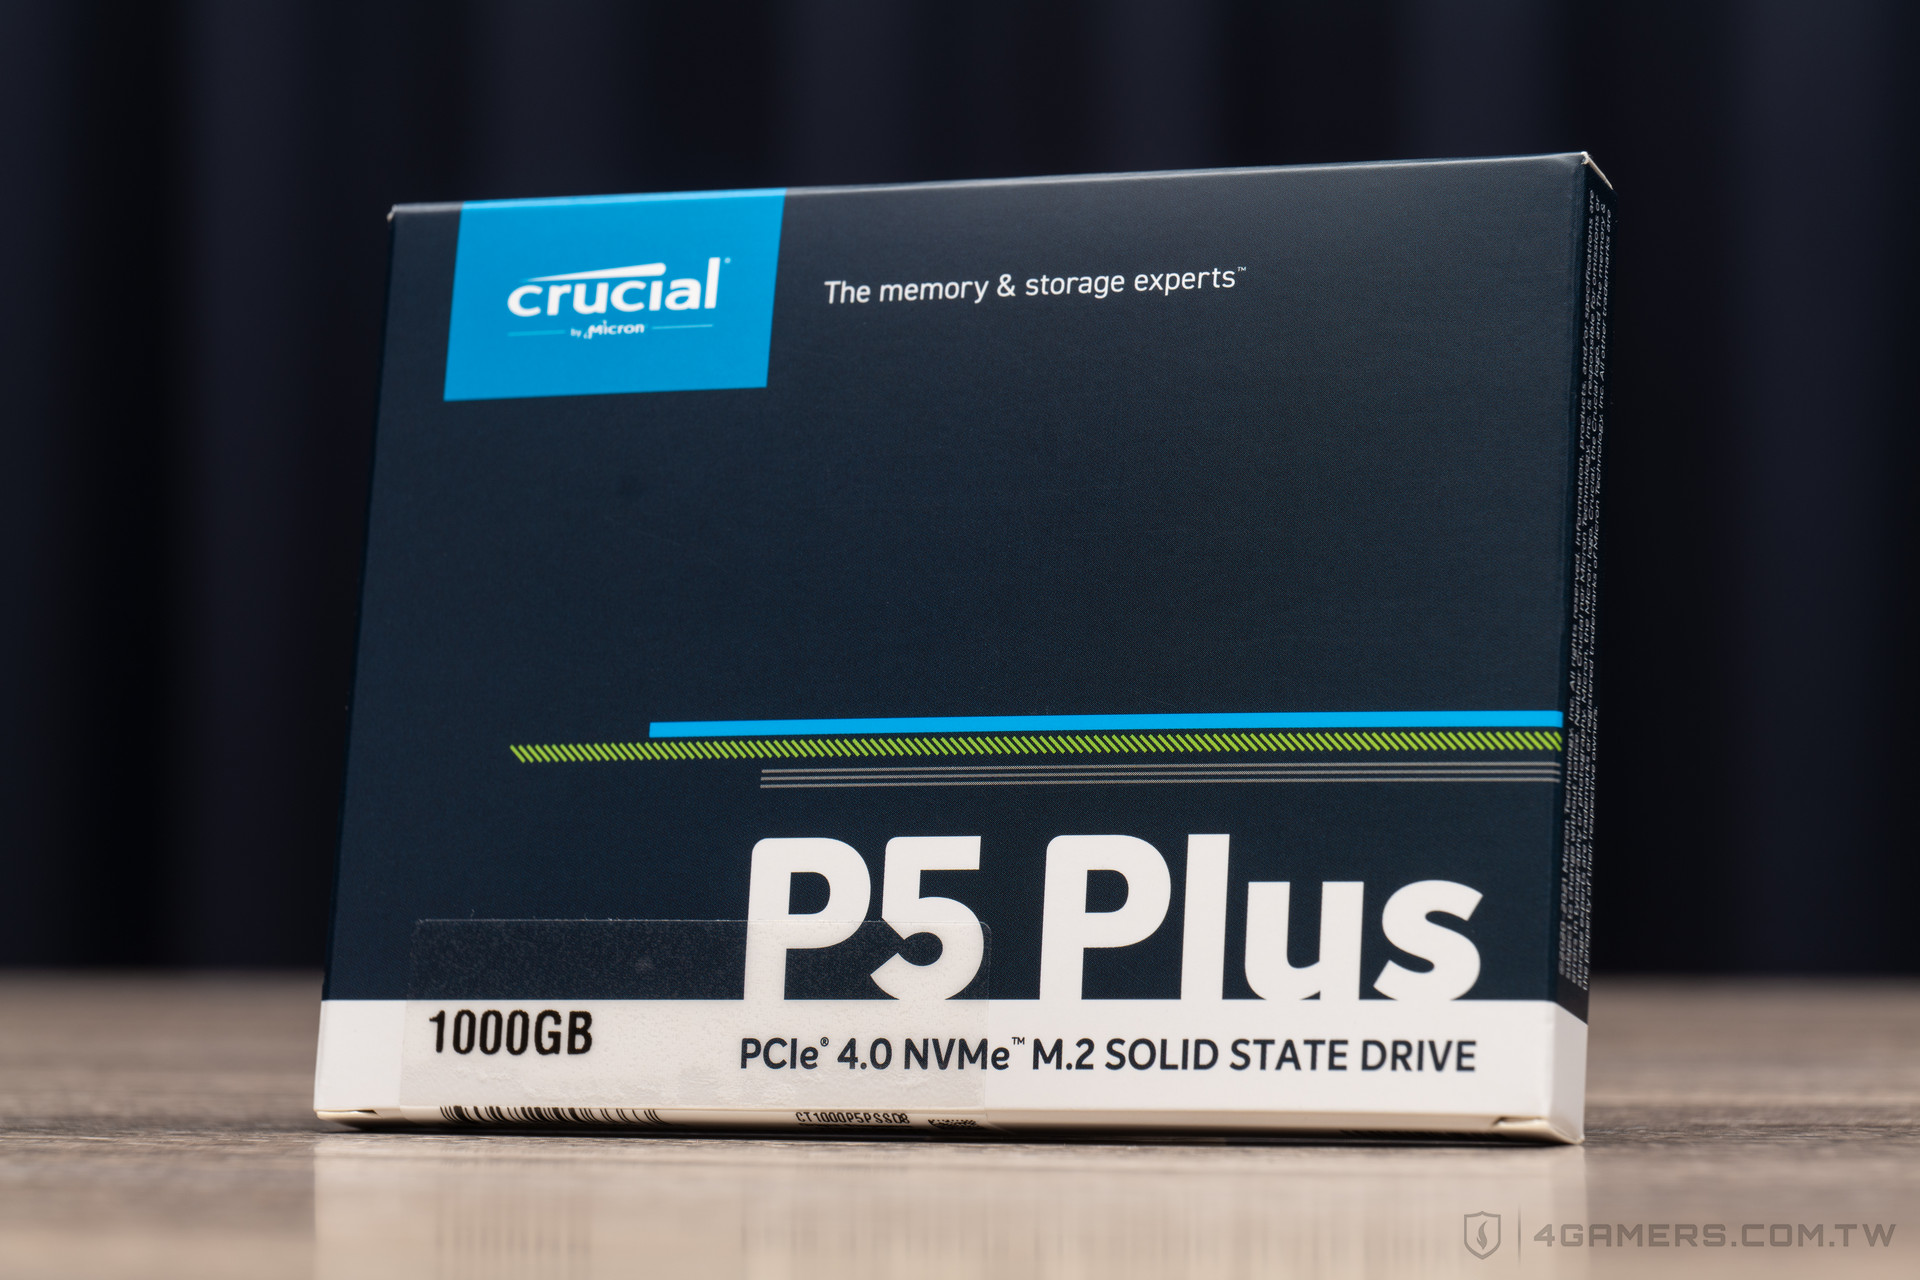 Crucial P5 Plus SSD